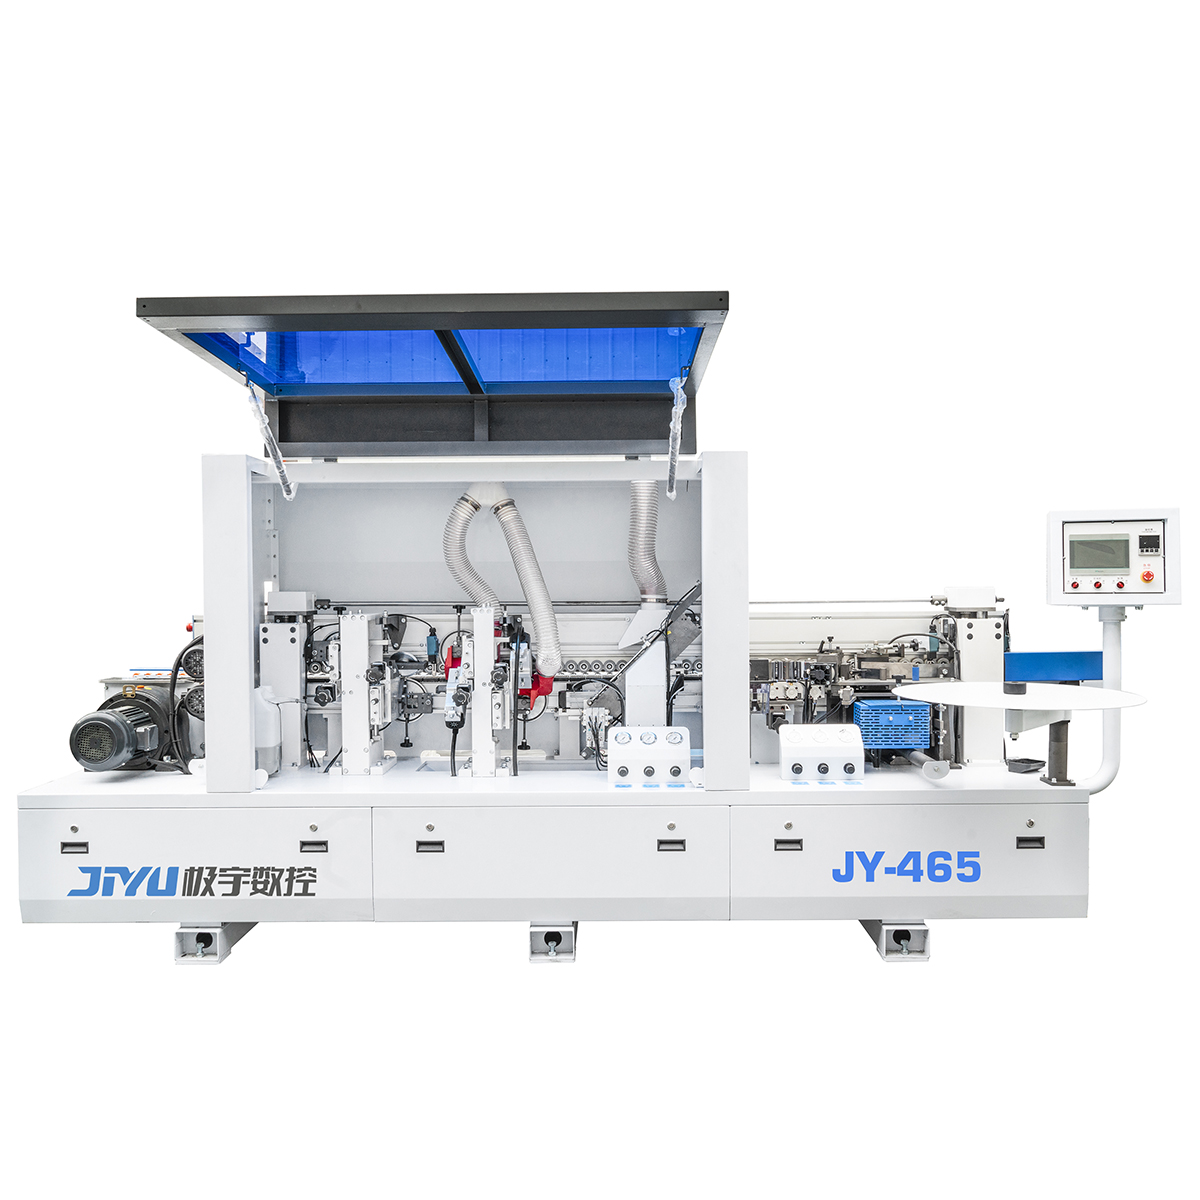 JY-465 Automatic Edge Banding Machine